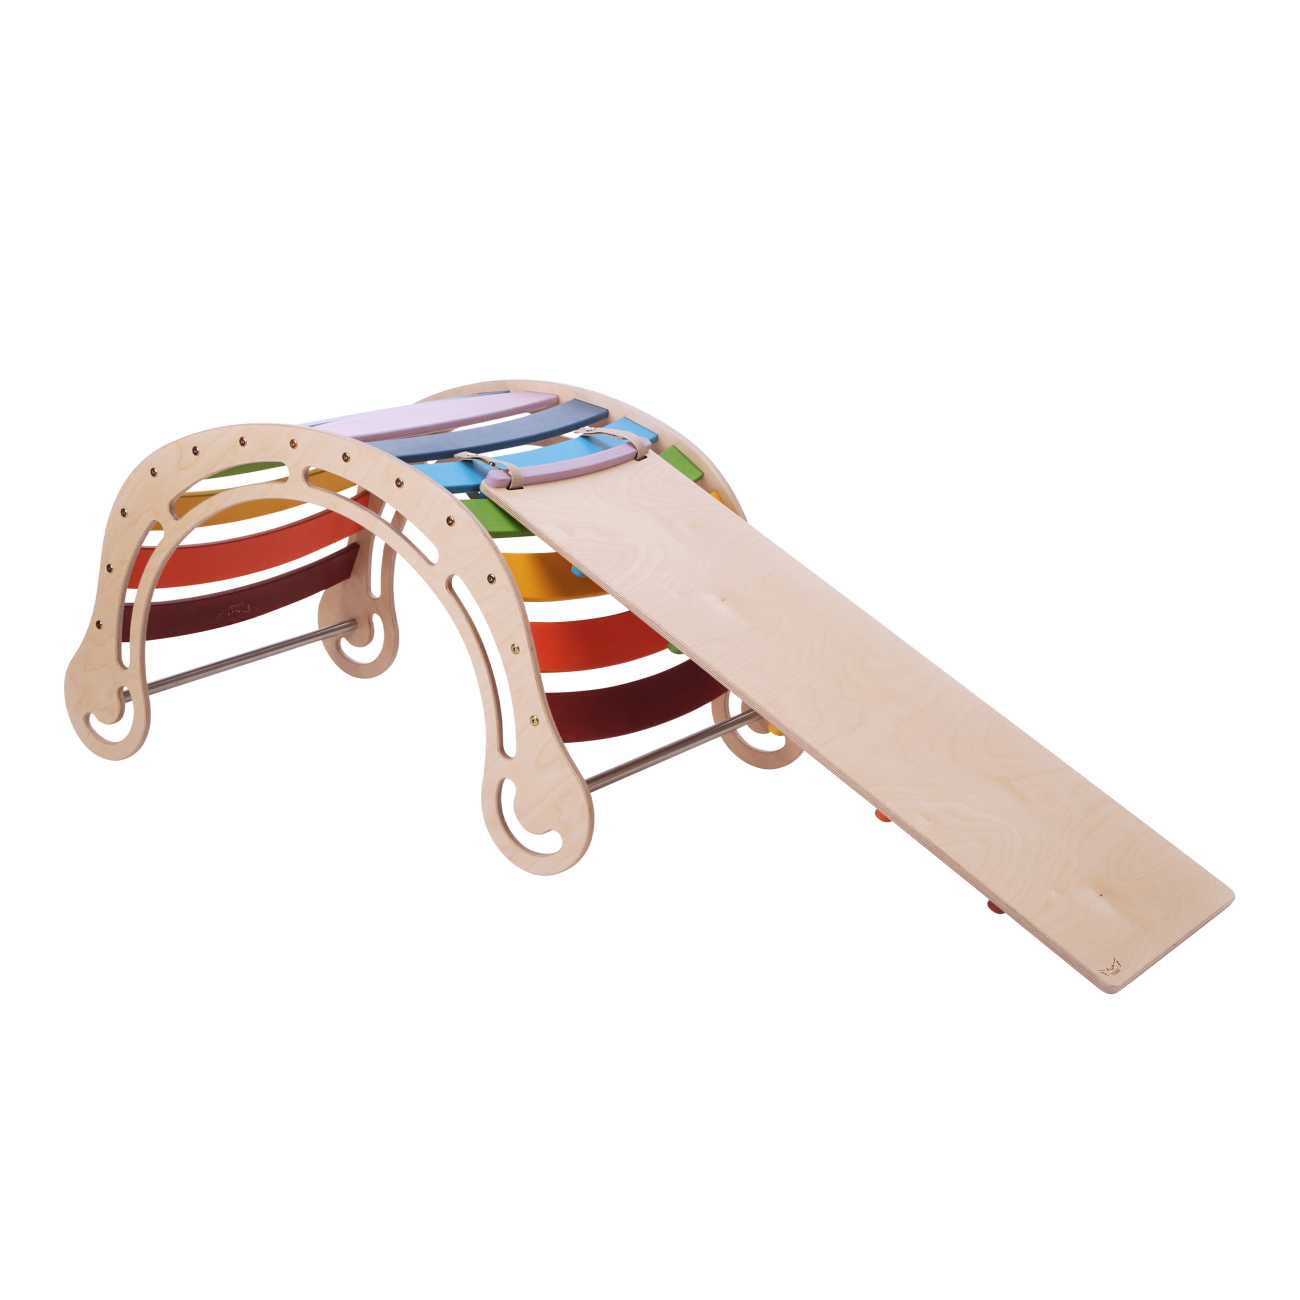 KateHaa XXL Waldorf Wippe mit Kletterwand, Kletterspielzeug aus Holz